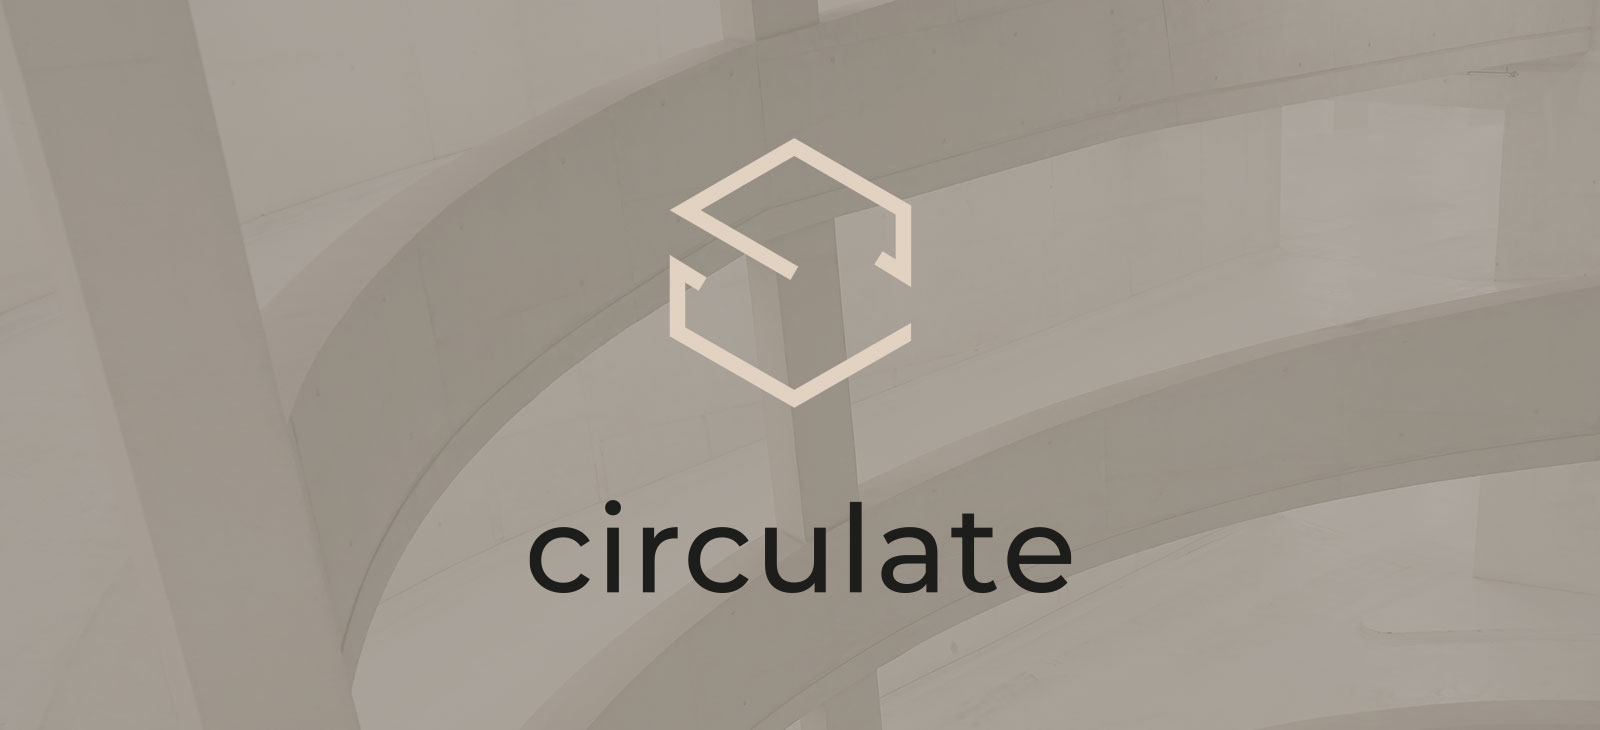 circulate - Logo + Key visual